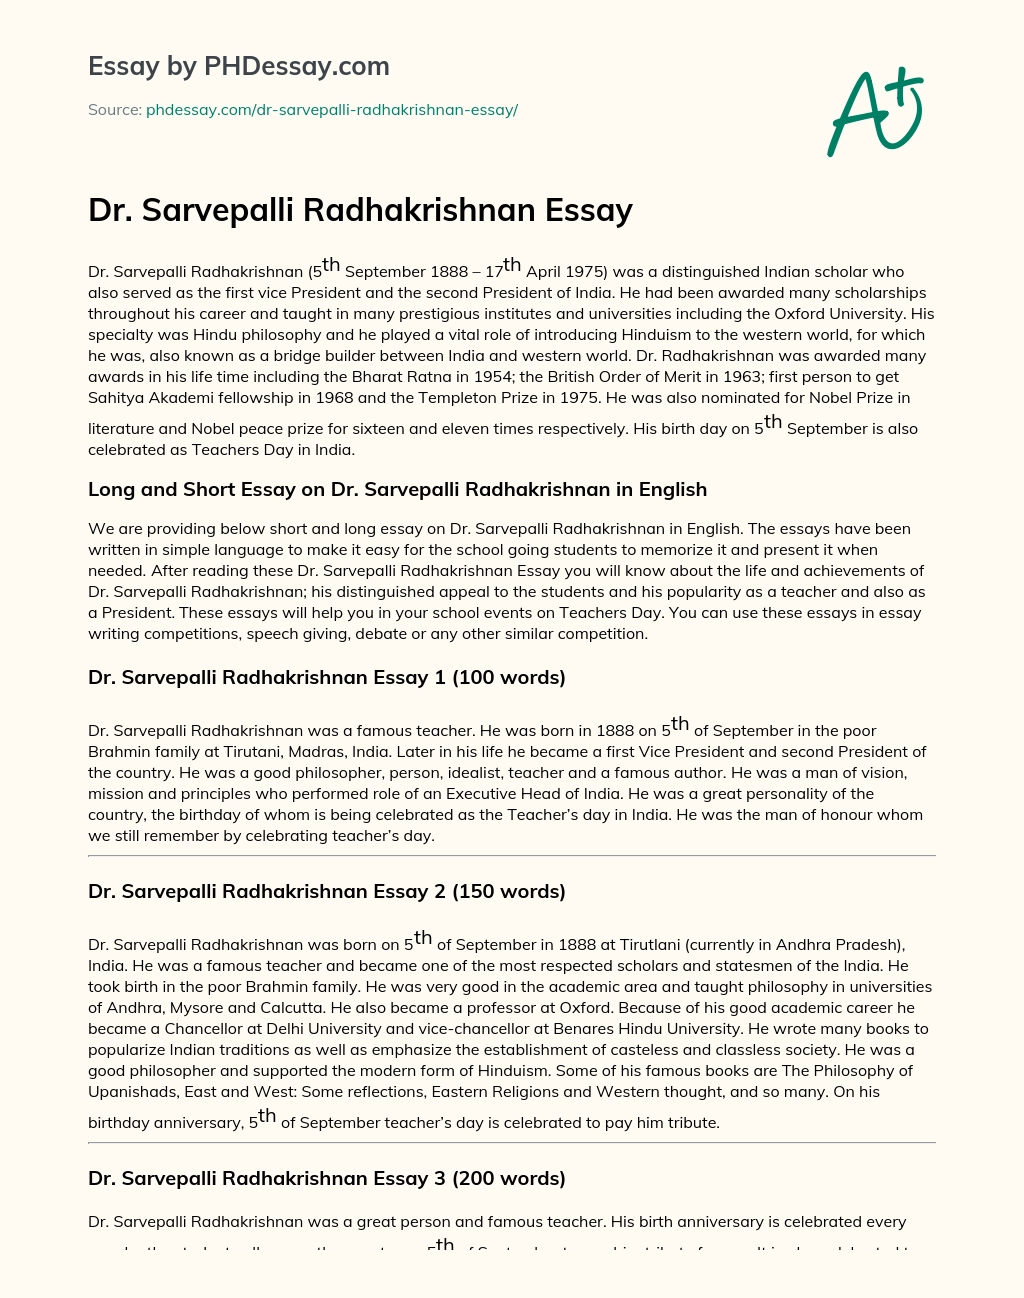 Dr. Sarvepalli Radhakrishnan Essay essay